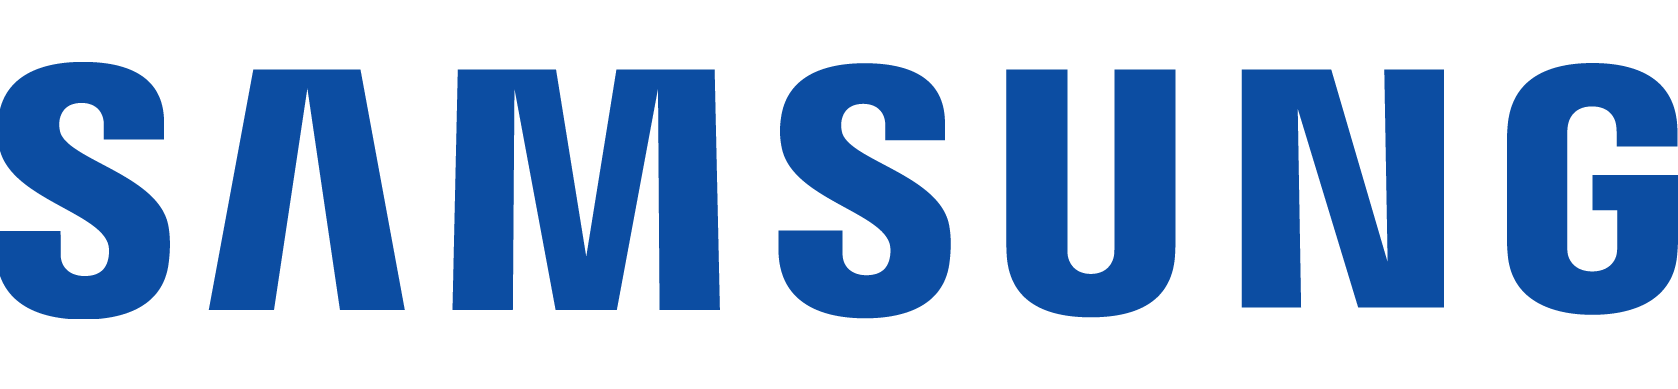 logo samsung